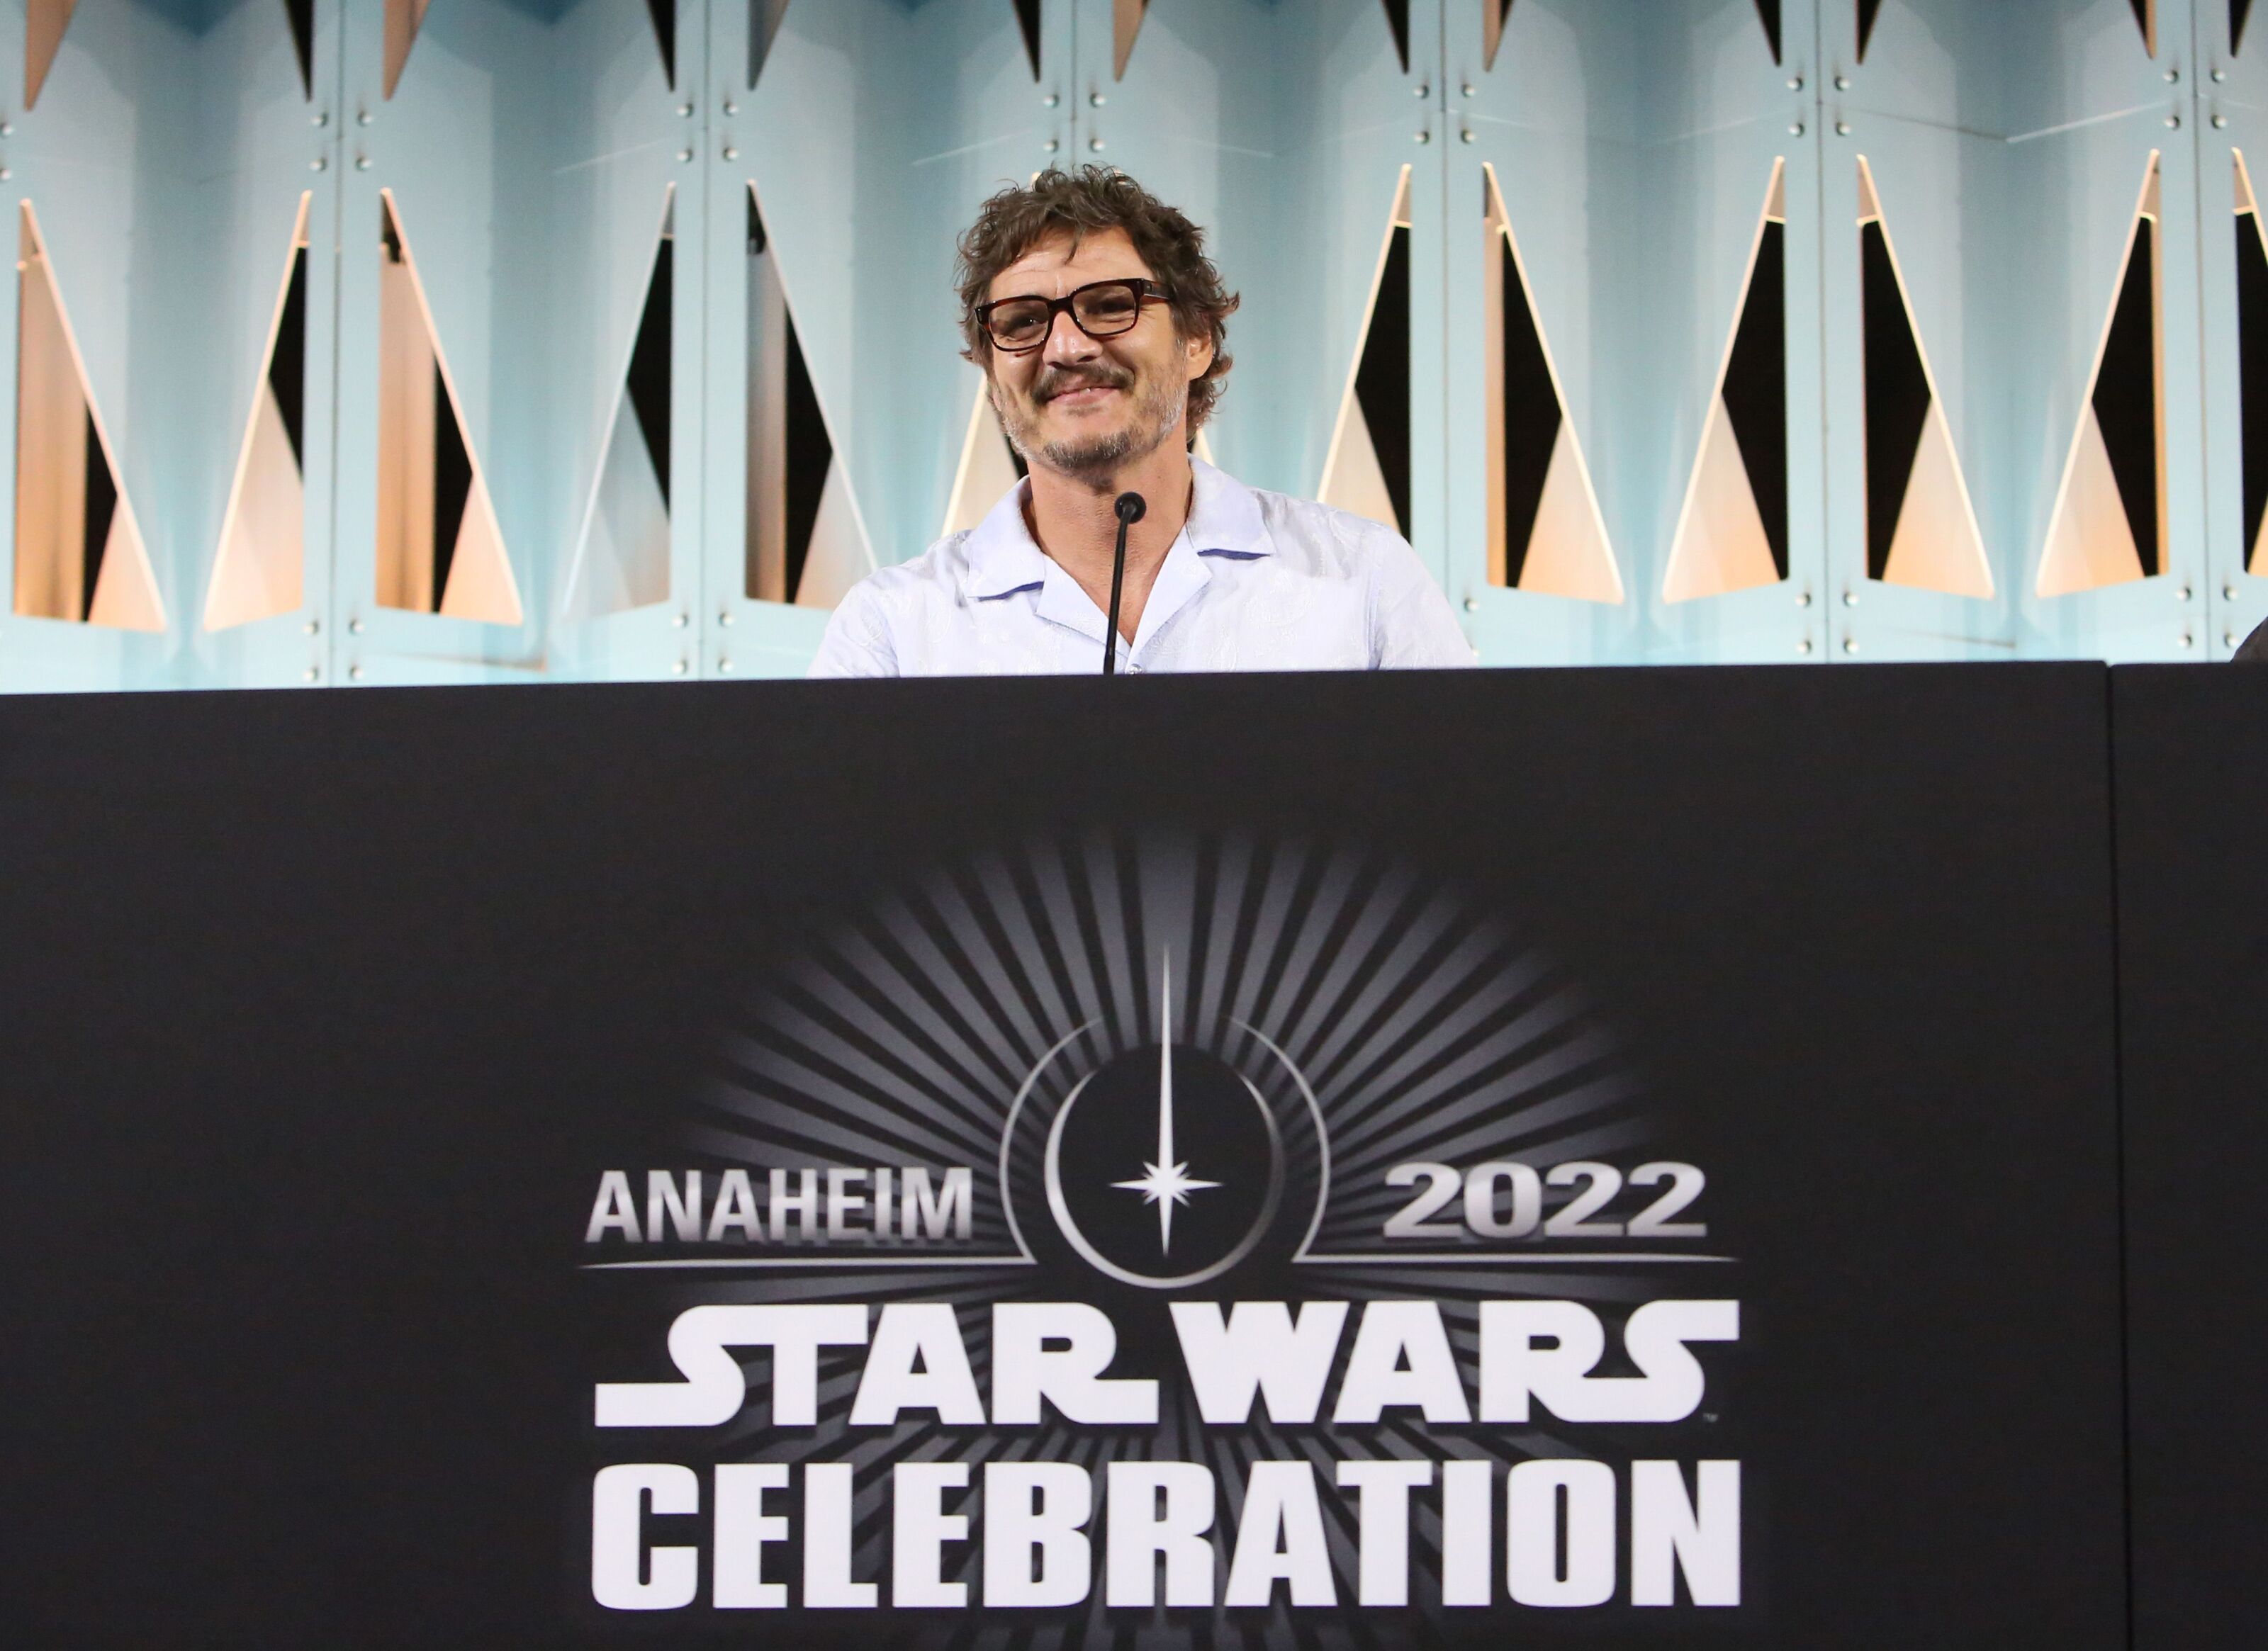 Star Wars: Andor Season 2 First Look Debuts at Celebration Convention